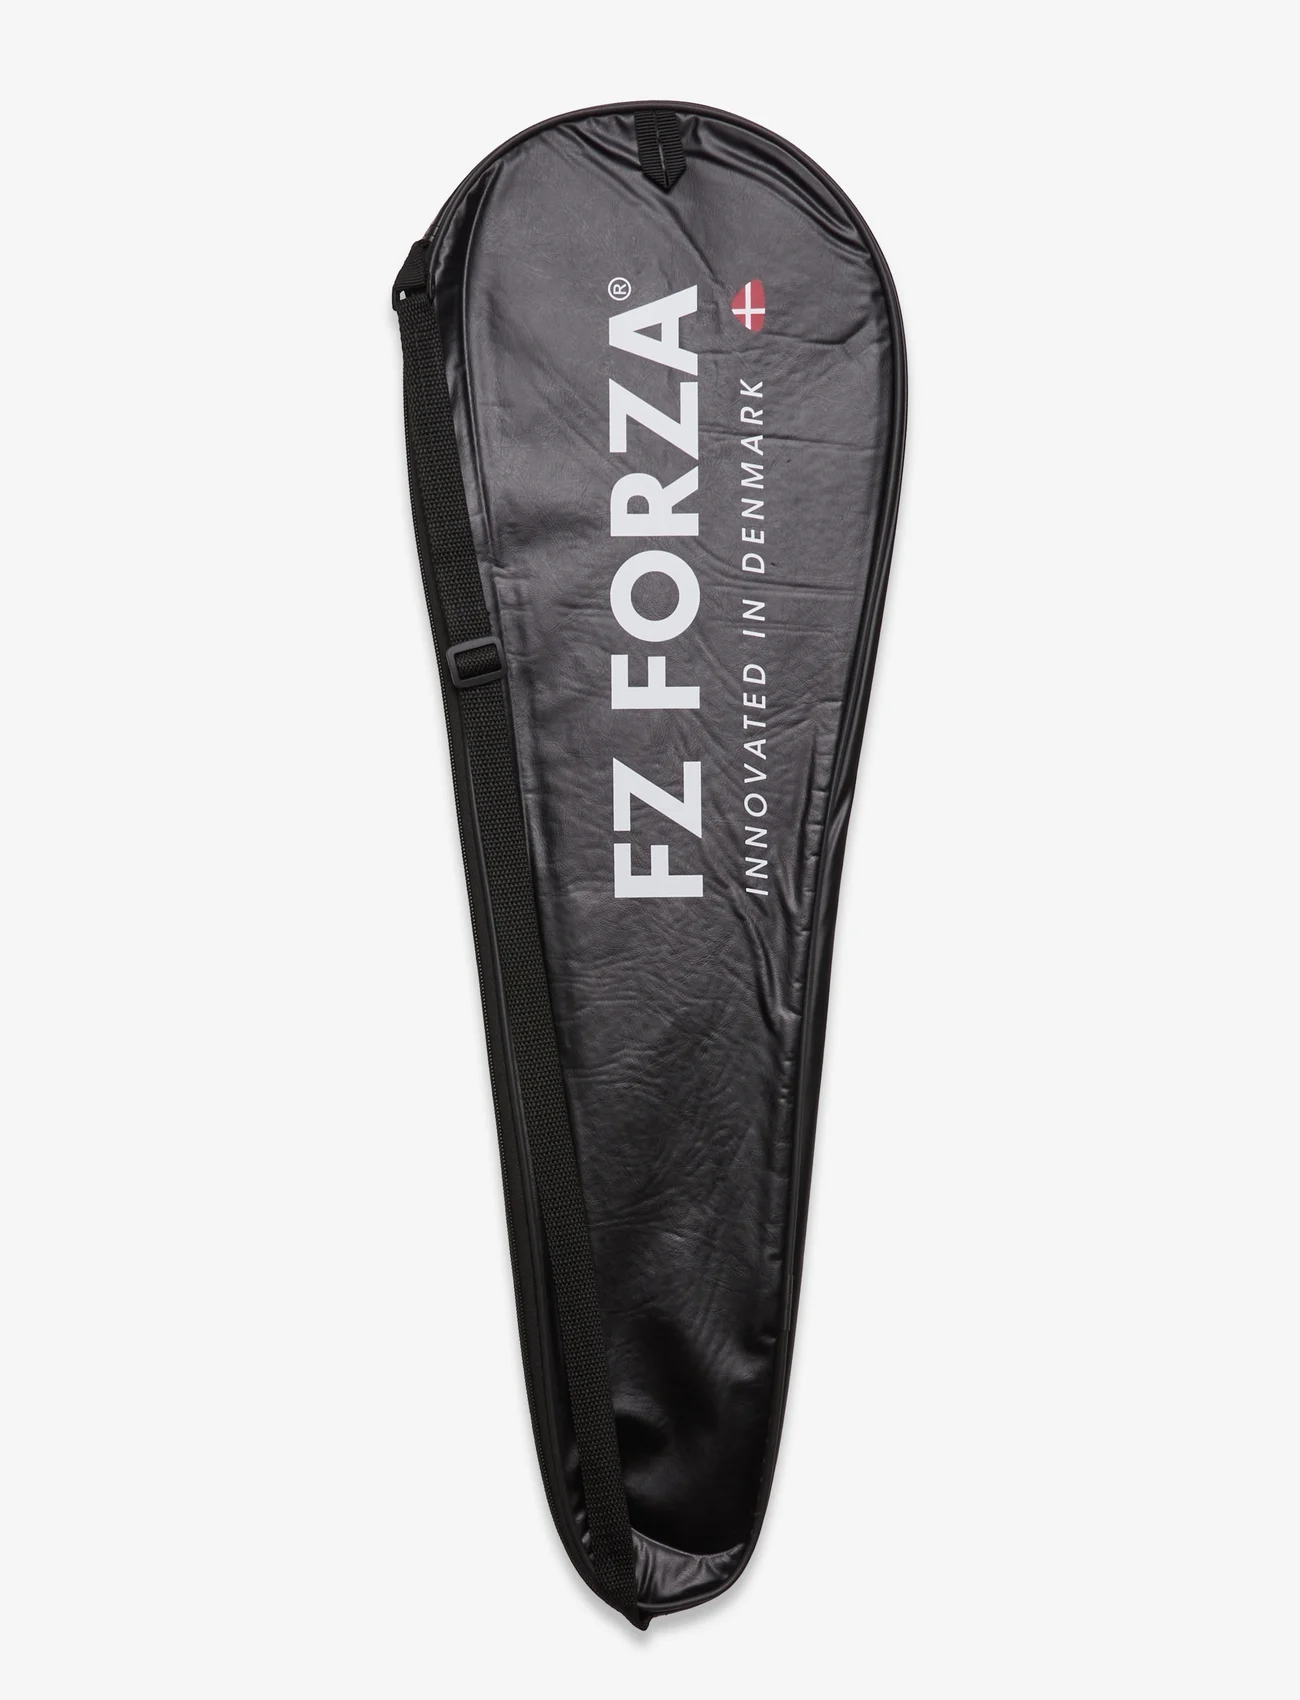 FZ Forza - FZ Fullcover - 01 - 0